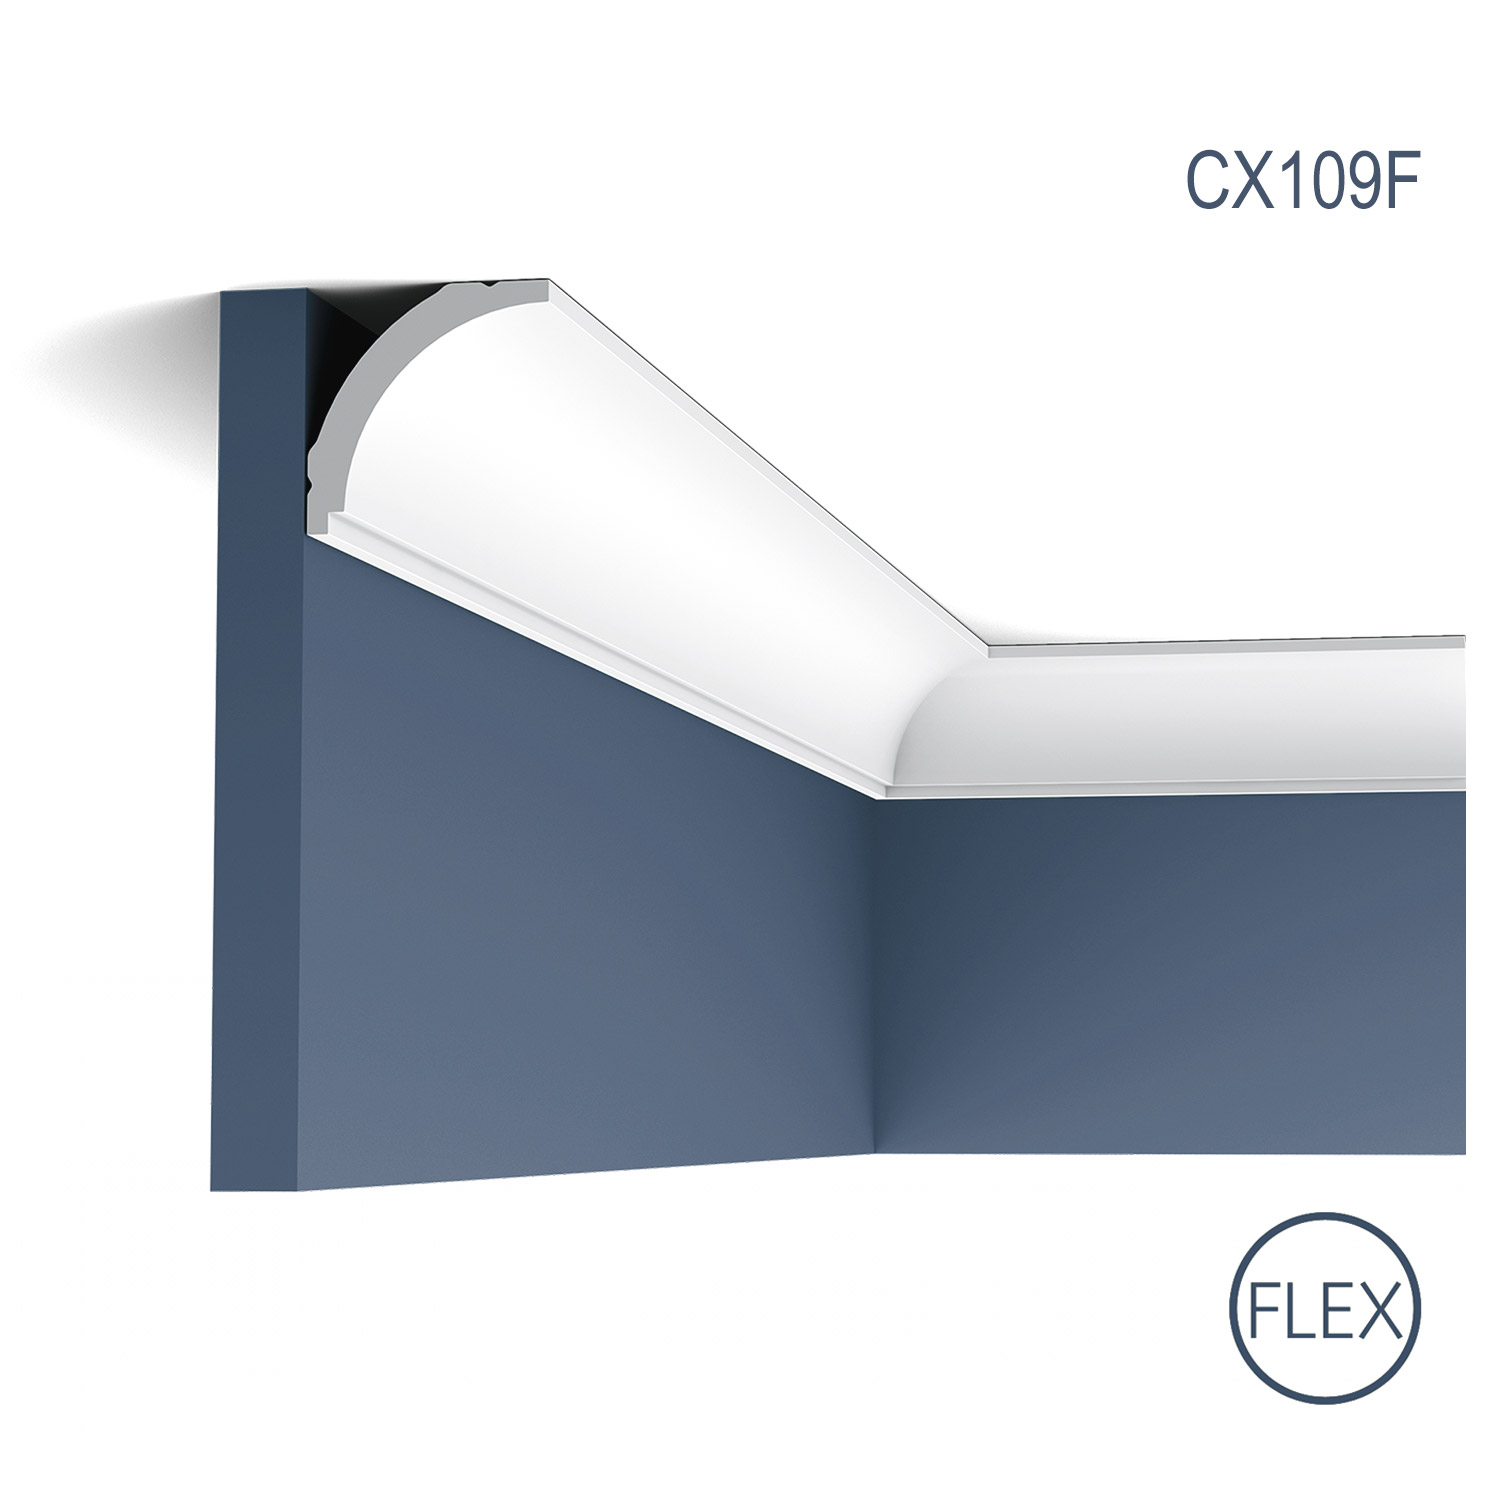 Cornisa Flex Axxent CX109F, Dimensiuni: 200 X 4.4 X 4.4 cm, Orac Decor